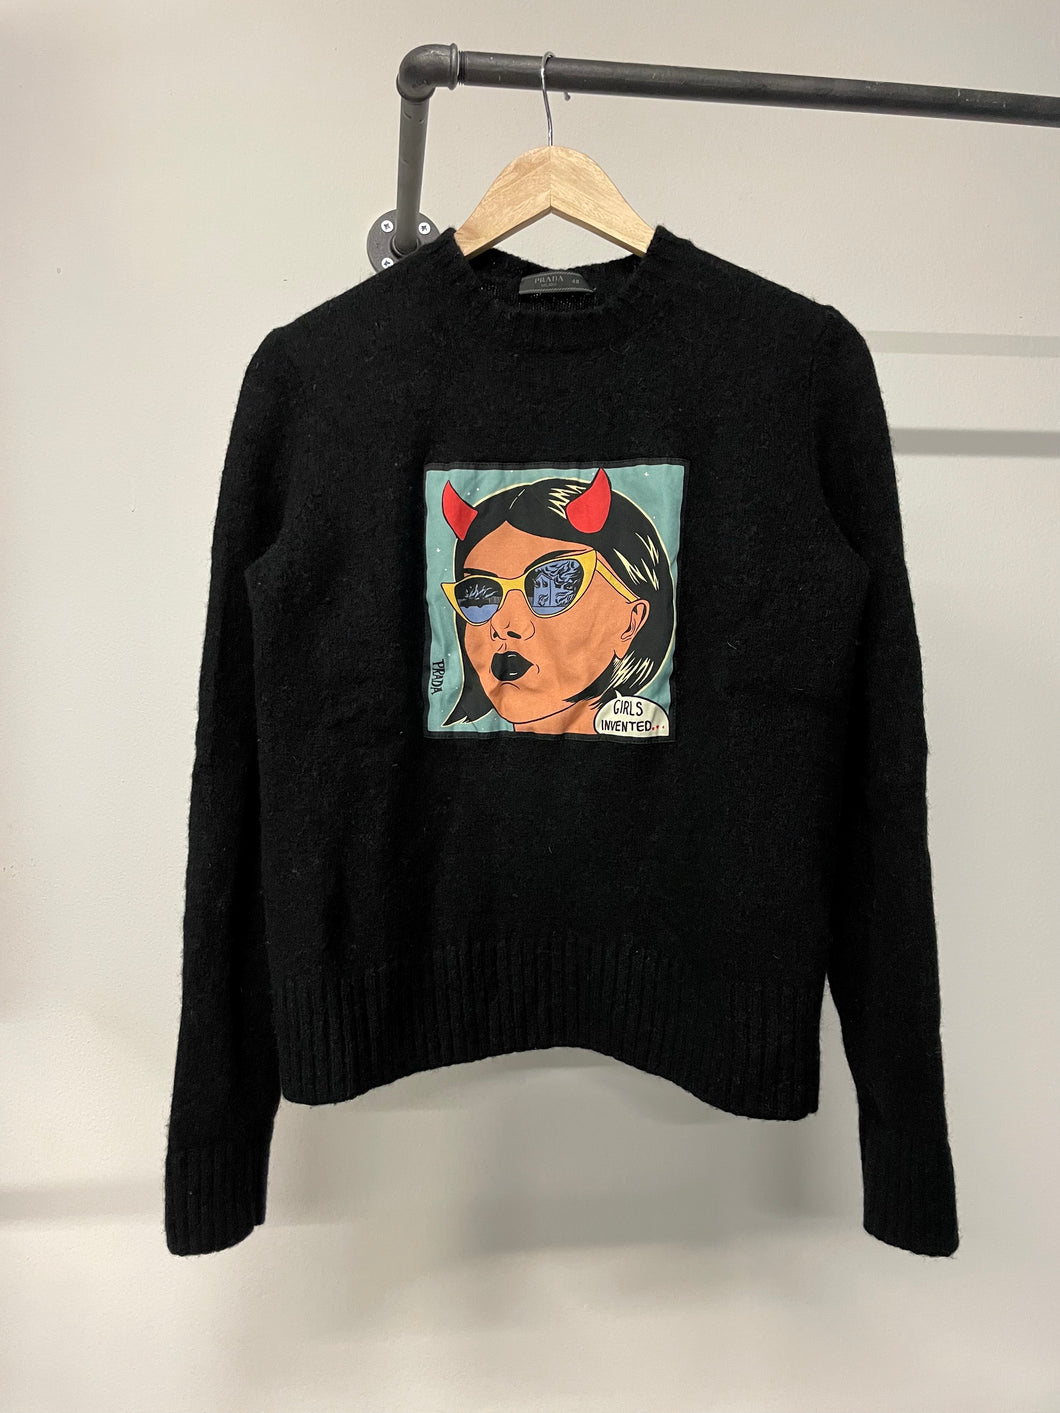 AW2017 Prada “Girls invented” sweater